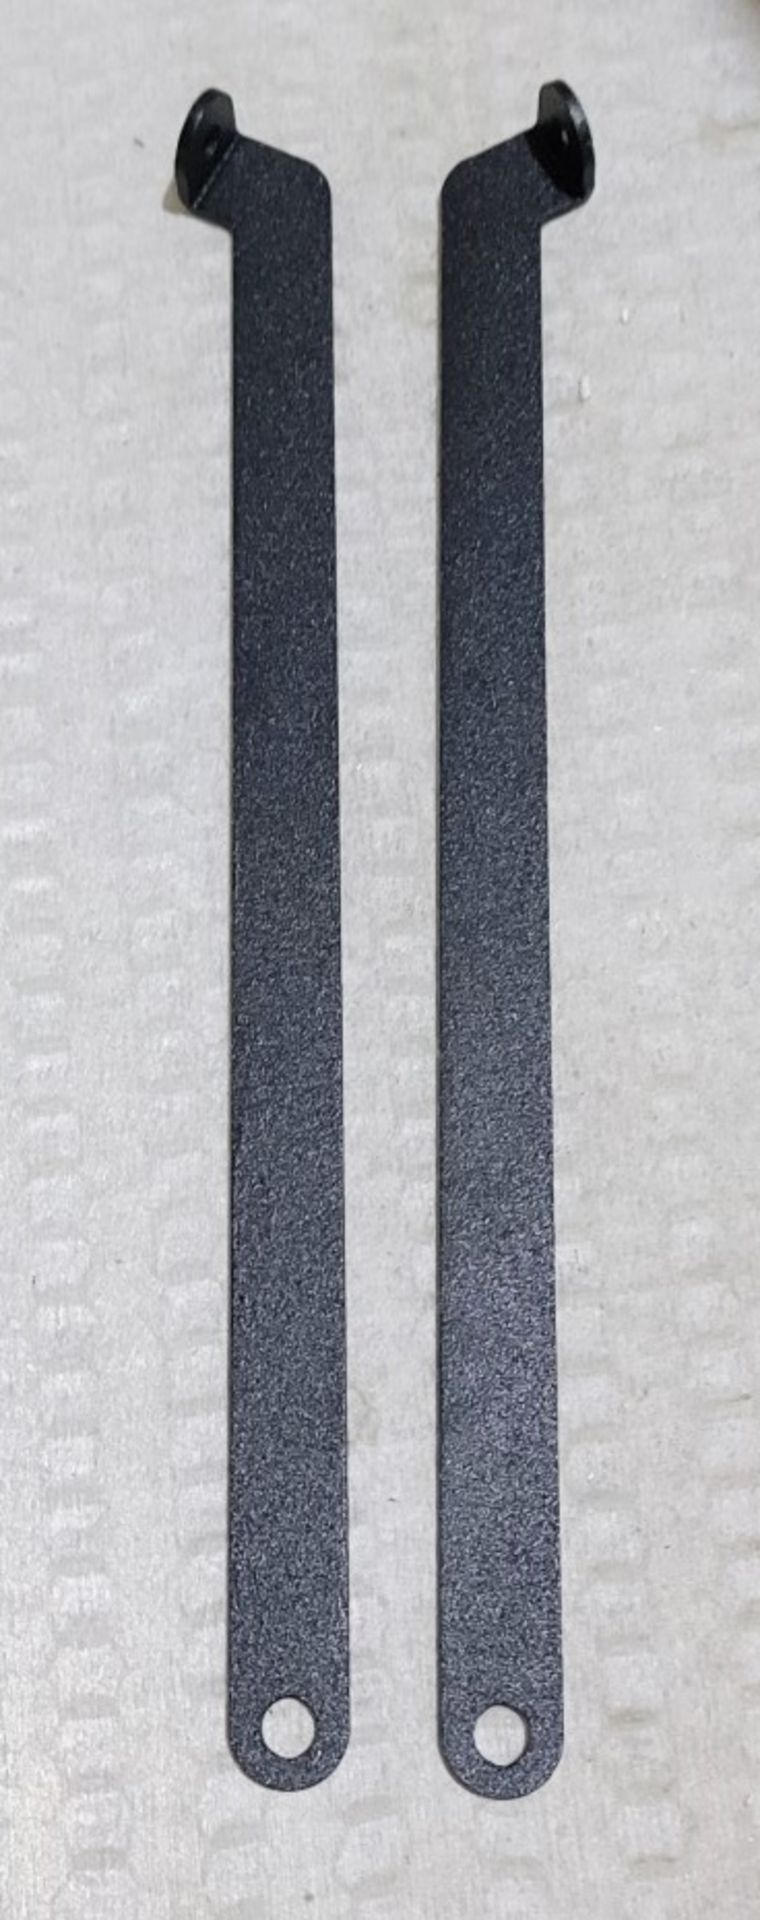 1 x WOOOD 'Gyan Legplank' Light Oak Shelf With Black Metal Braces 80cm - Image 4 of 6